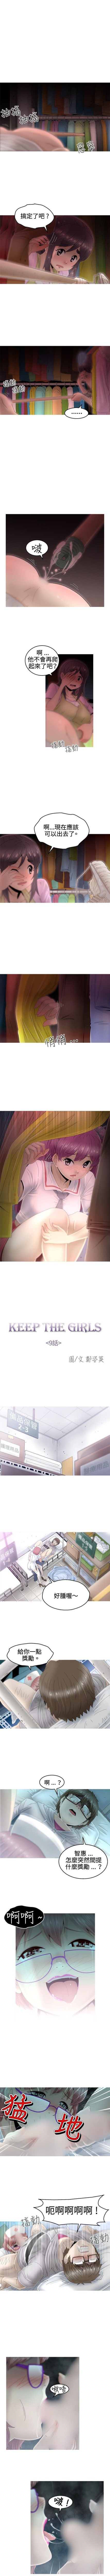 KEEP THE GIRLS 1-24 55